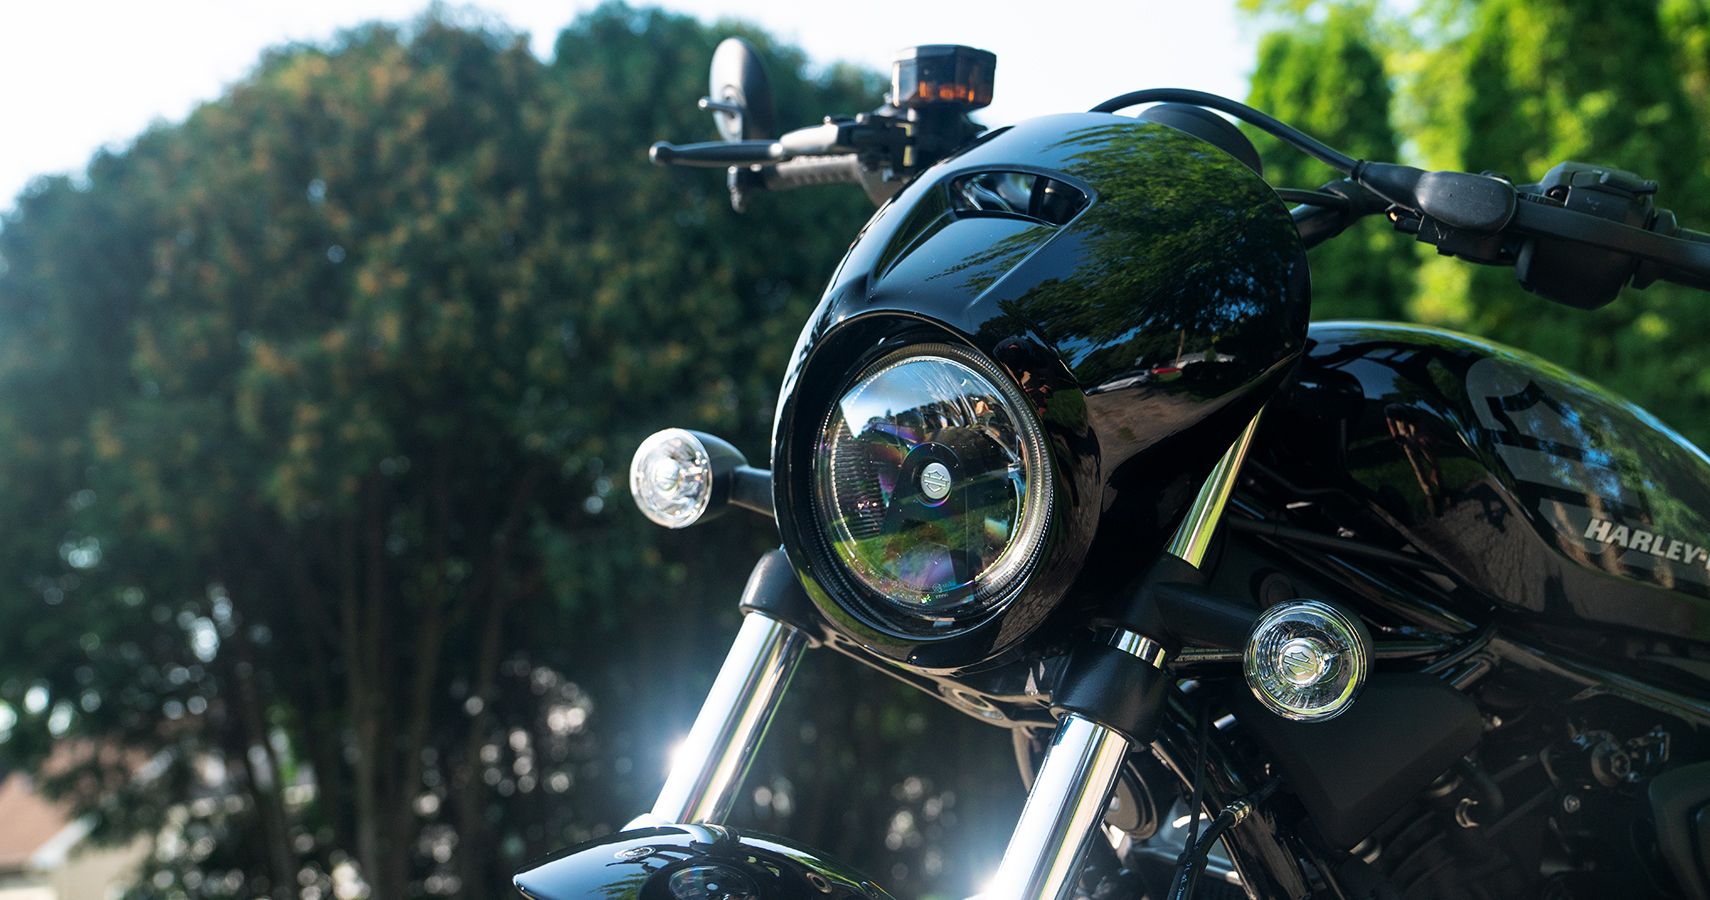 2022 Harley-Davidson Nightster headlight